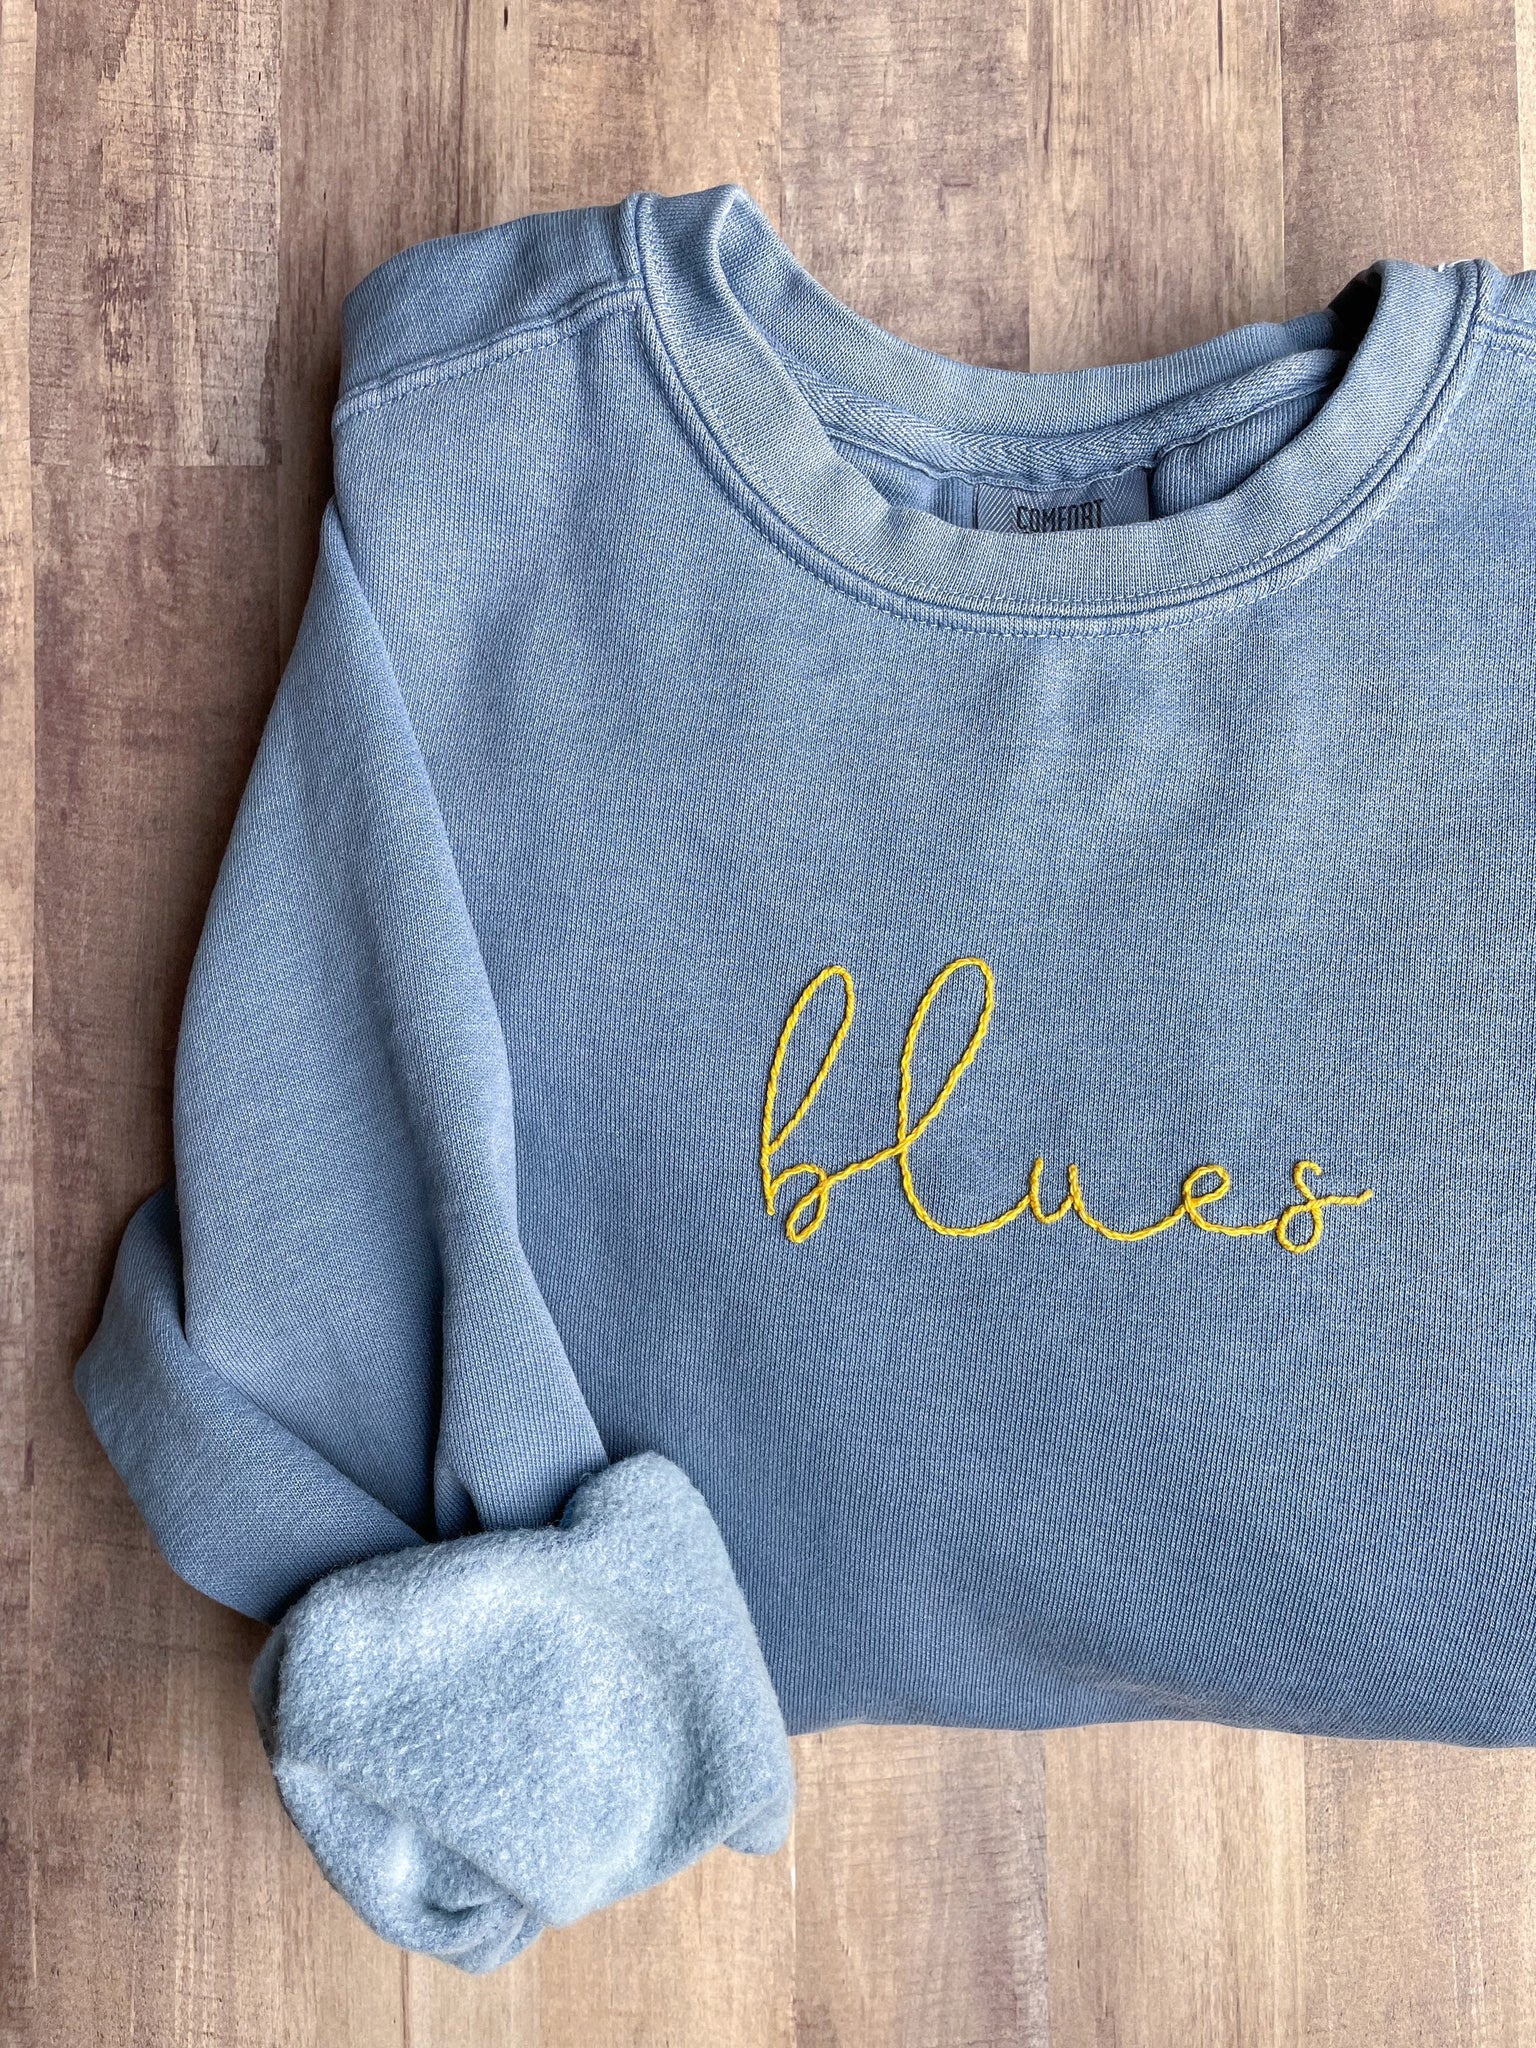 Blues Hand Embroidered Sweatshirt